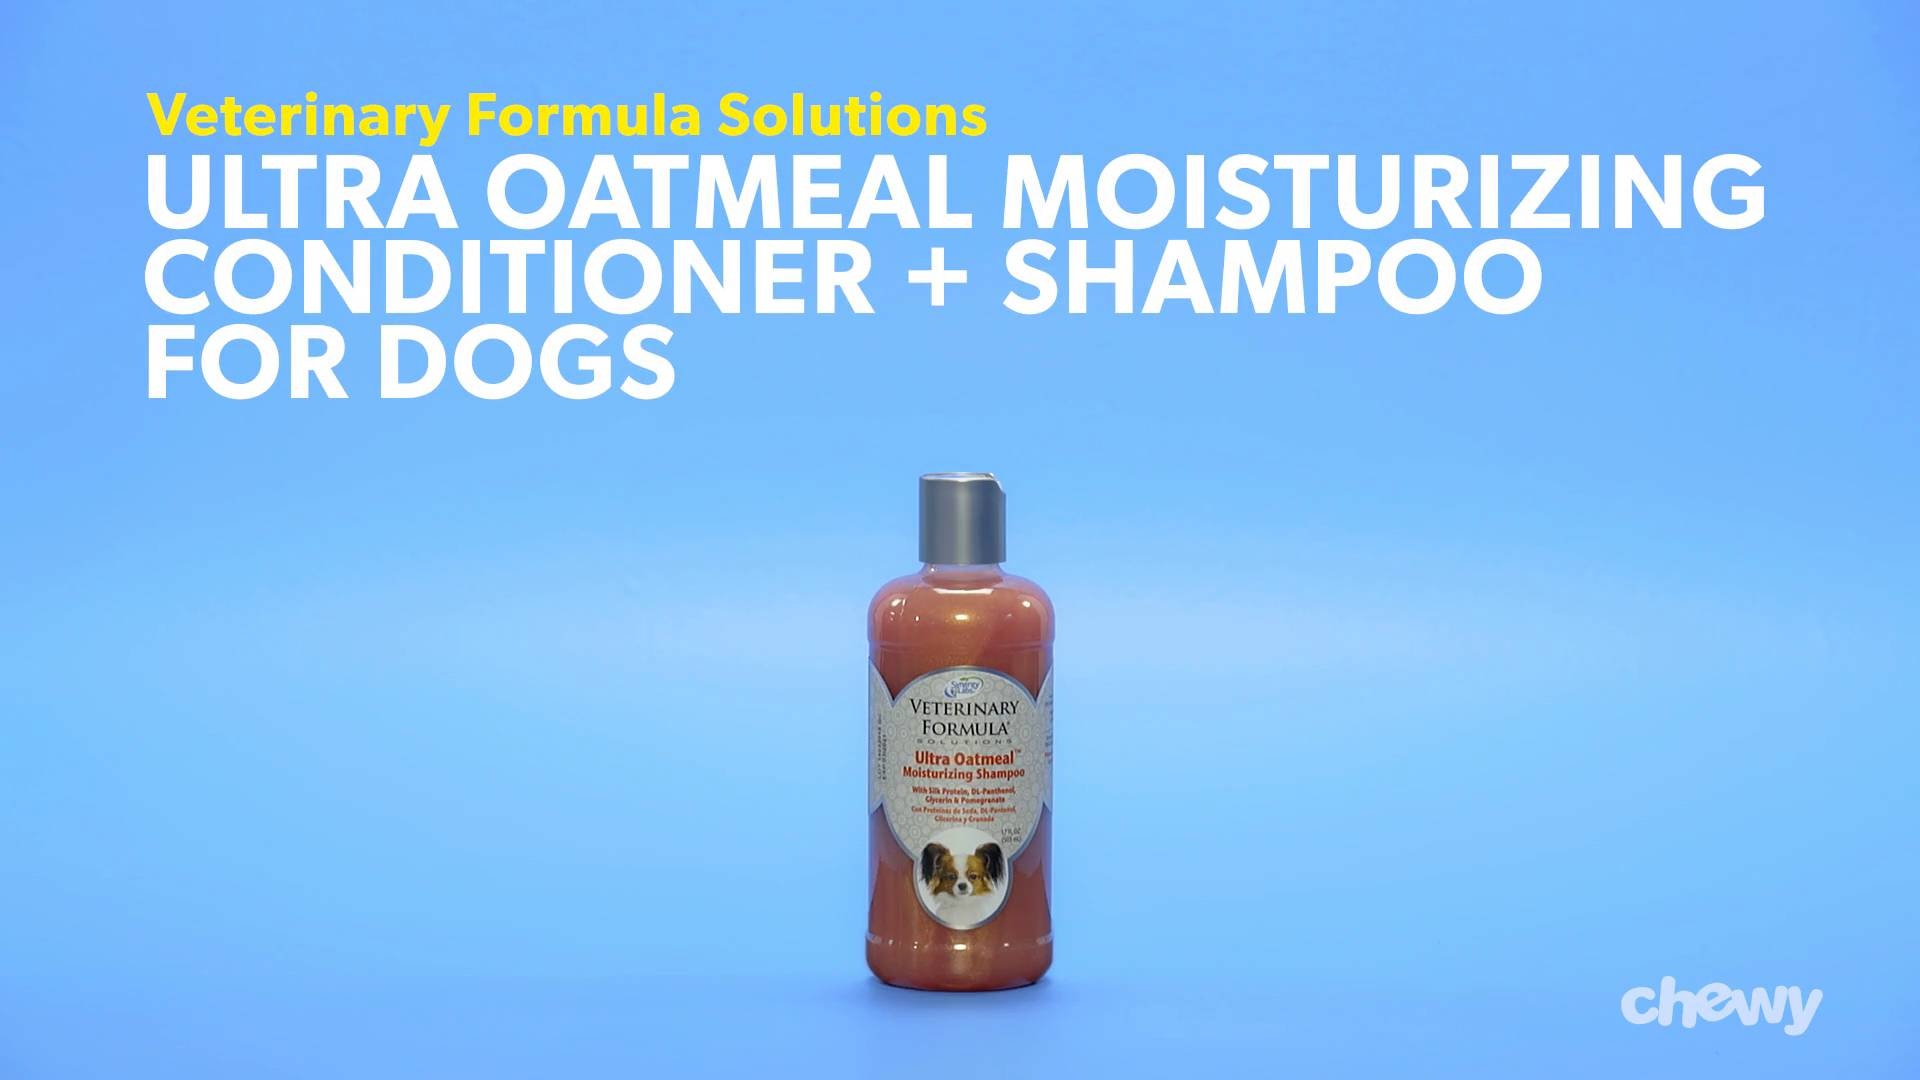 VETERINARY FORMULA SOLUTIONS Ultra Oatmeal Moisturizing Shampoo